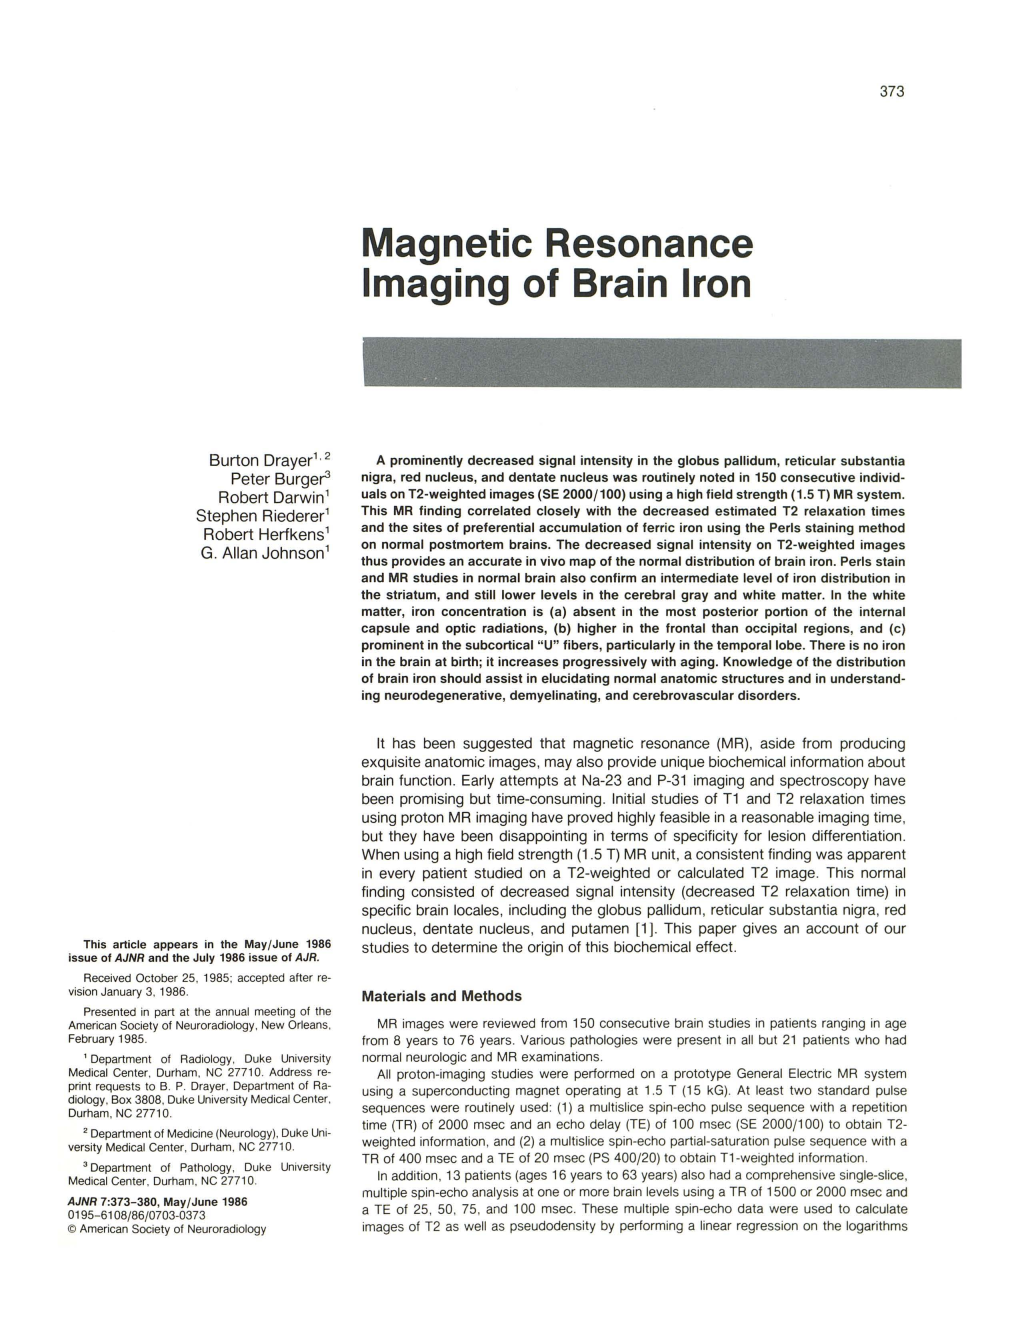 Magnetic Resonance Imaging of Brain Iron